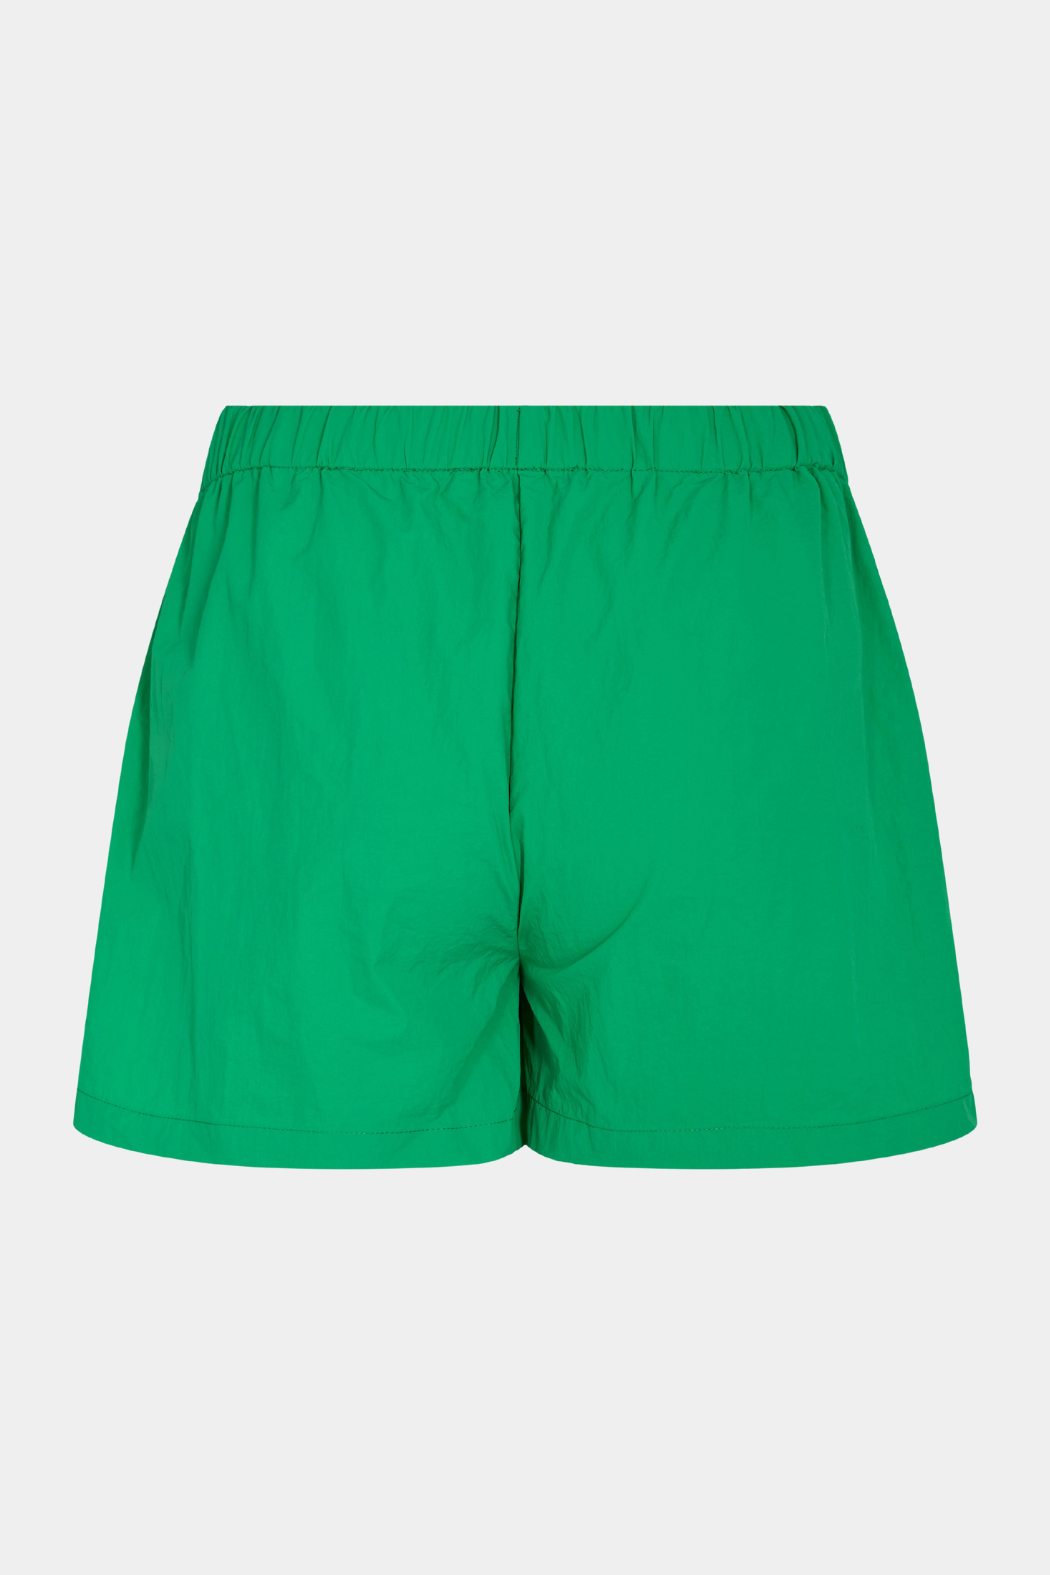 S232328 shorts, bright green